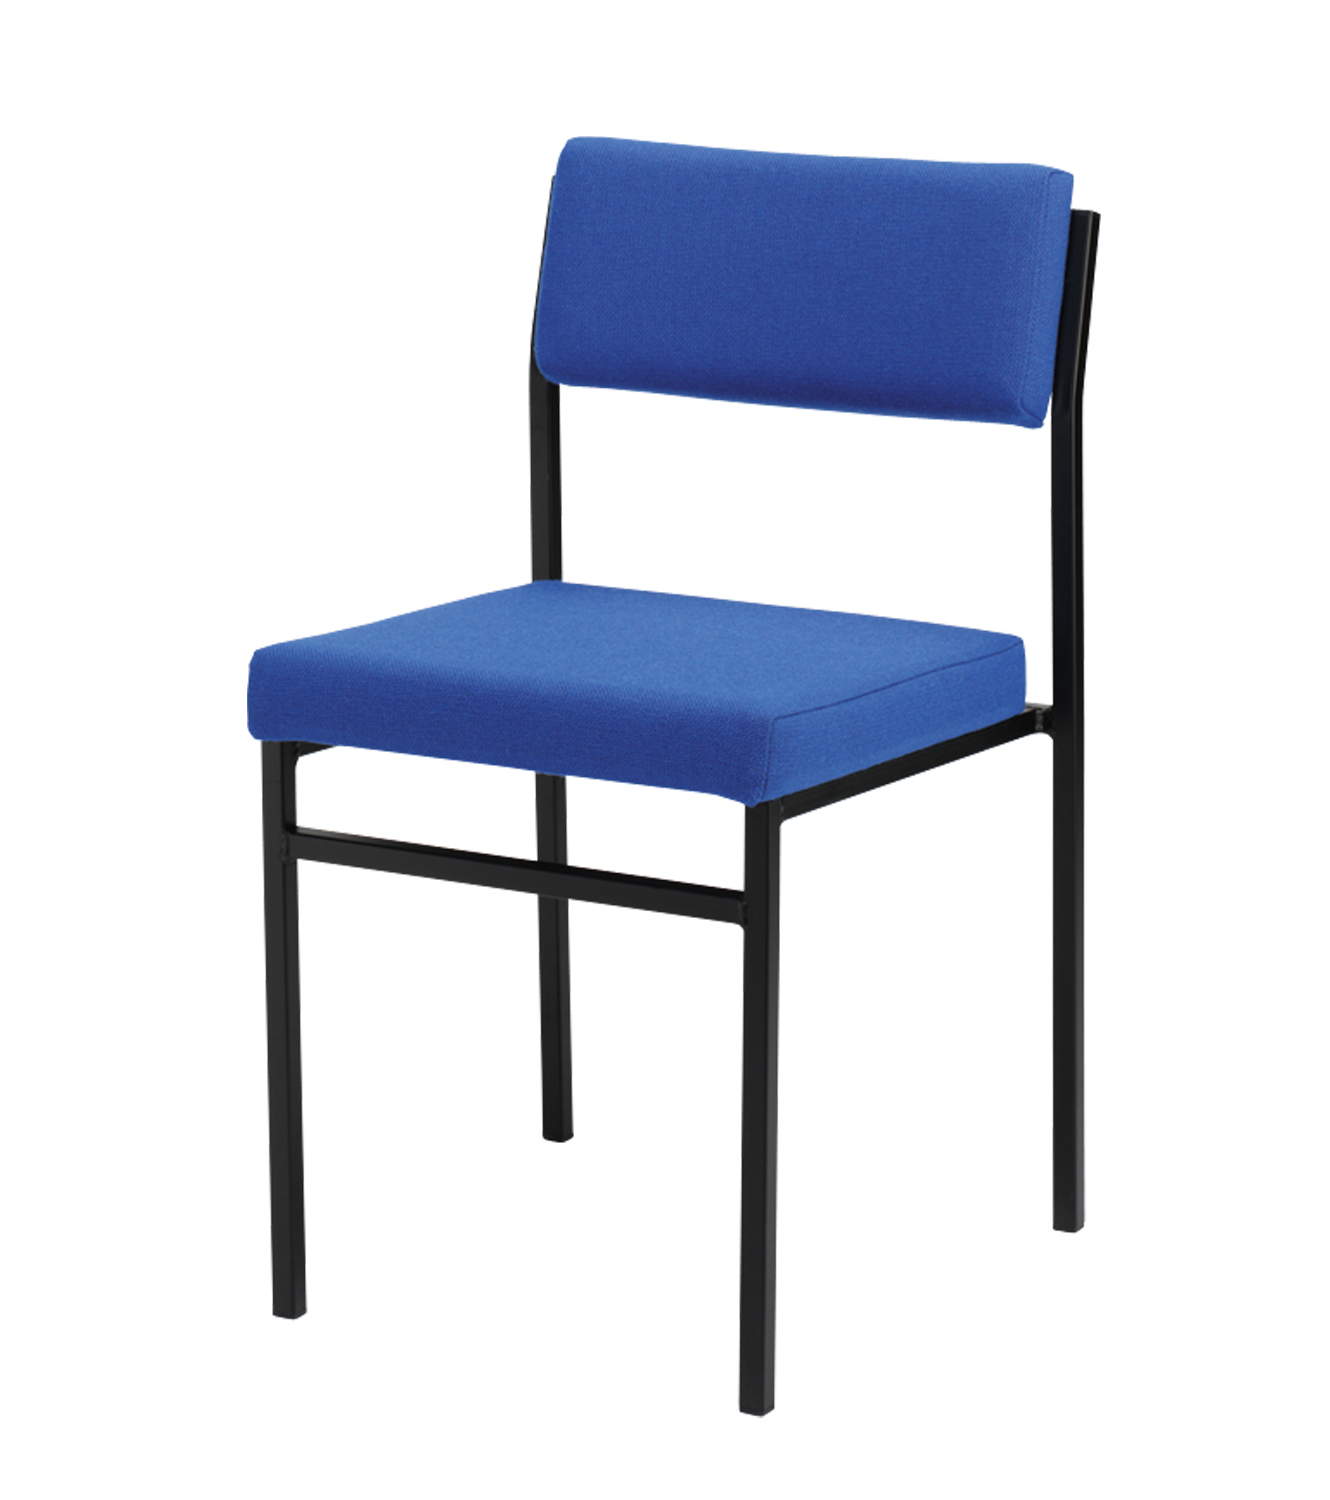 Saltford 19 S1 Meeting Chairs